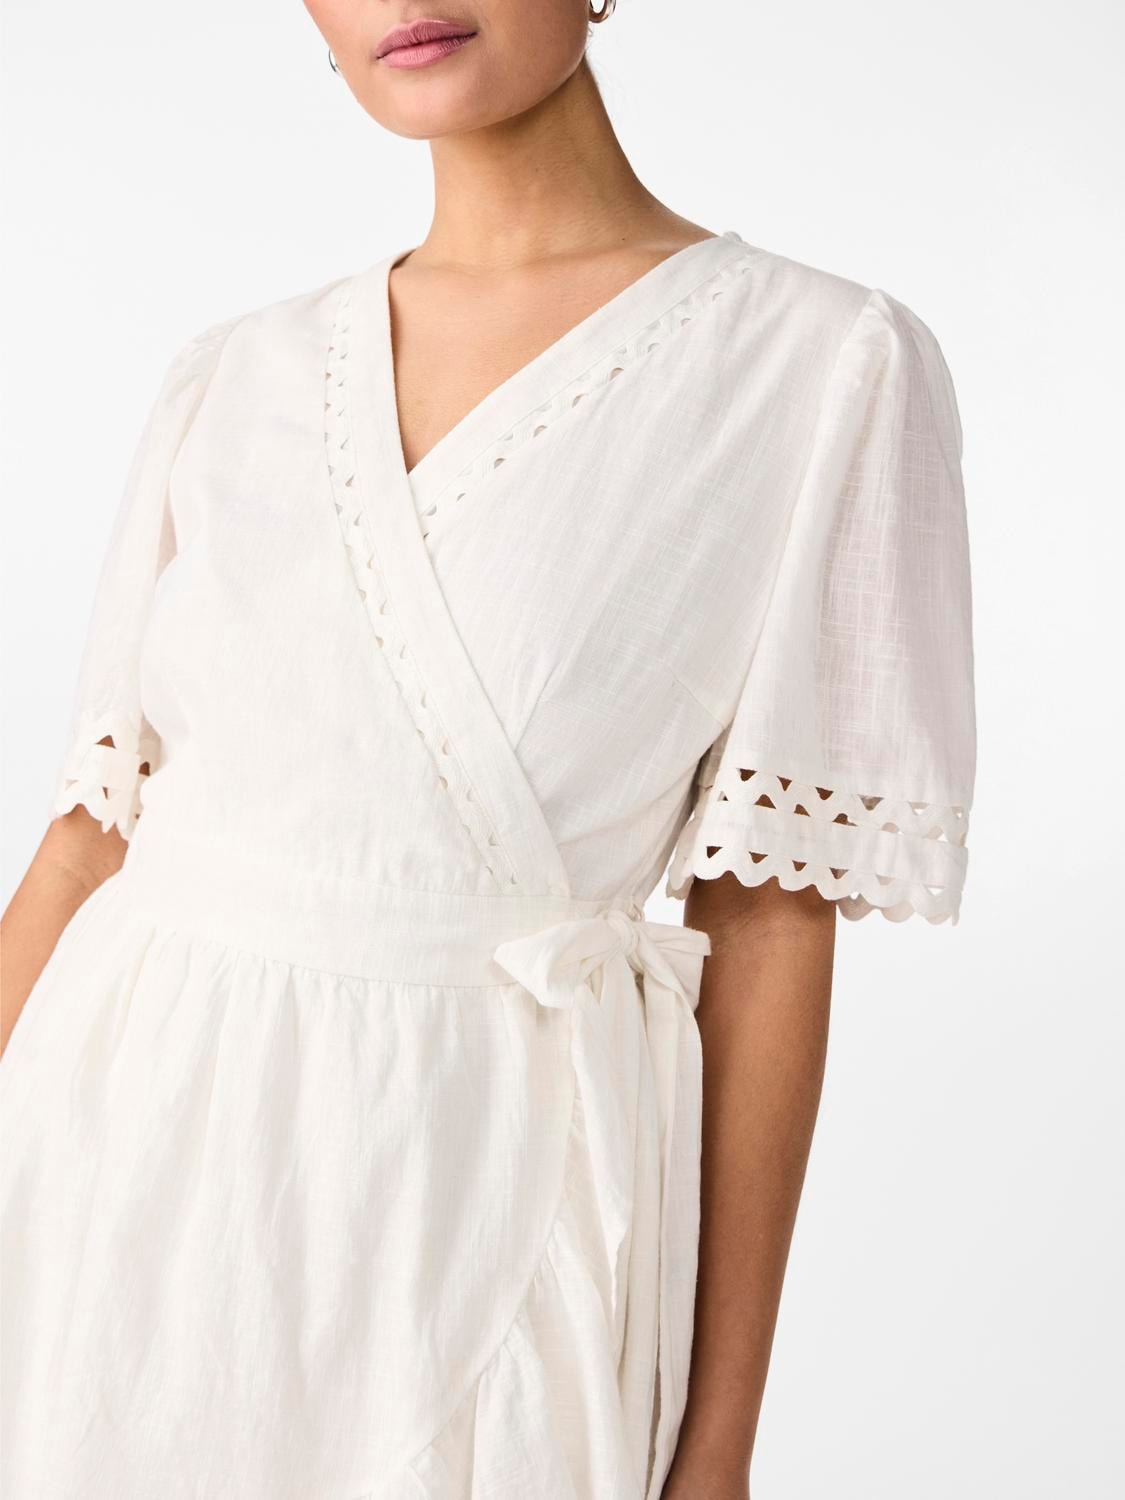 Yasnavina 2/4 Wrap Dress S - Star White